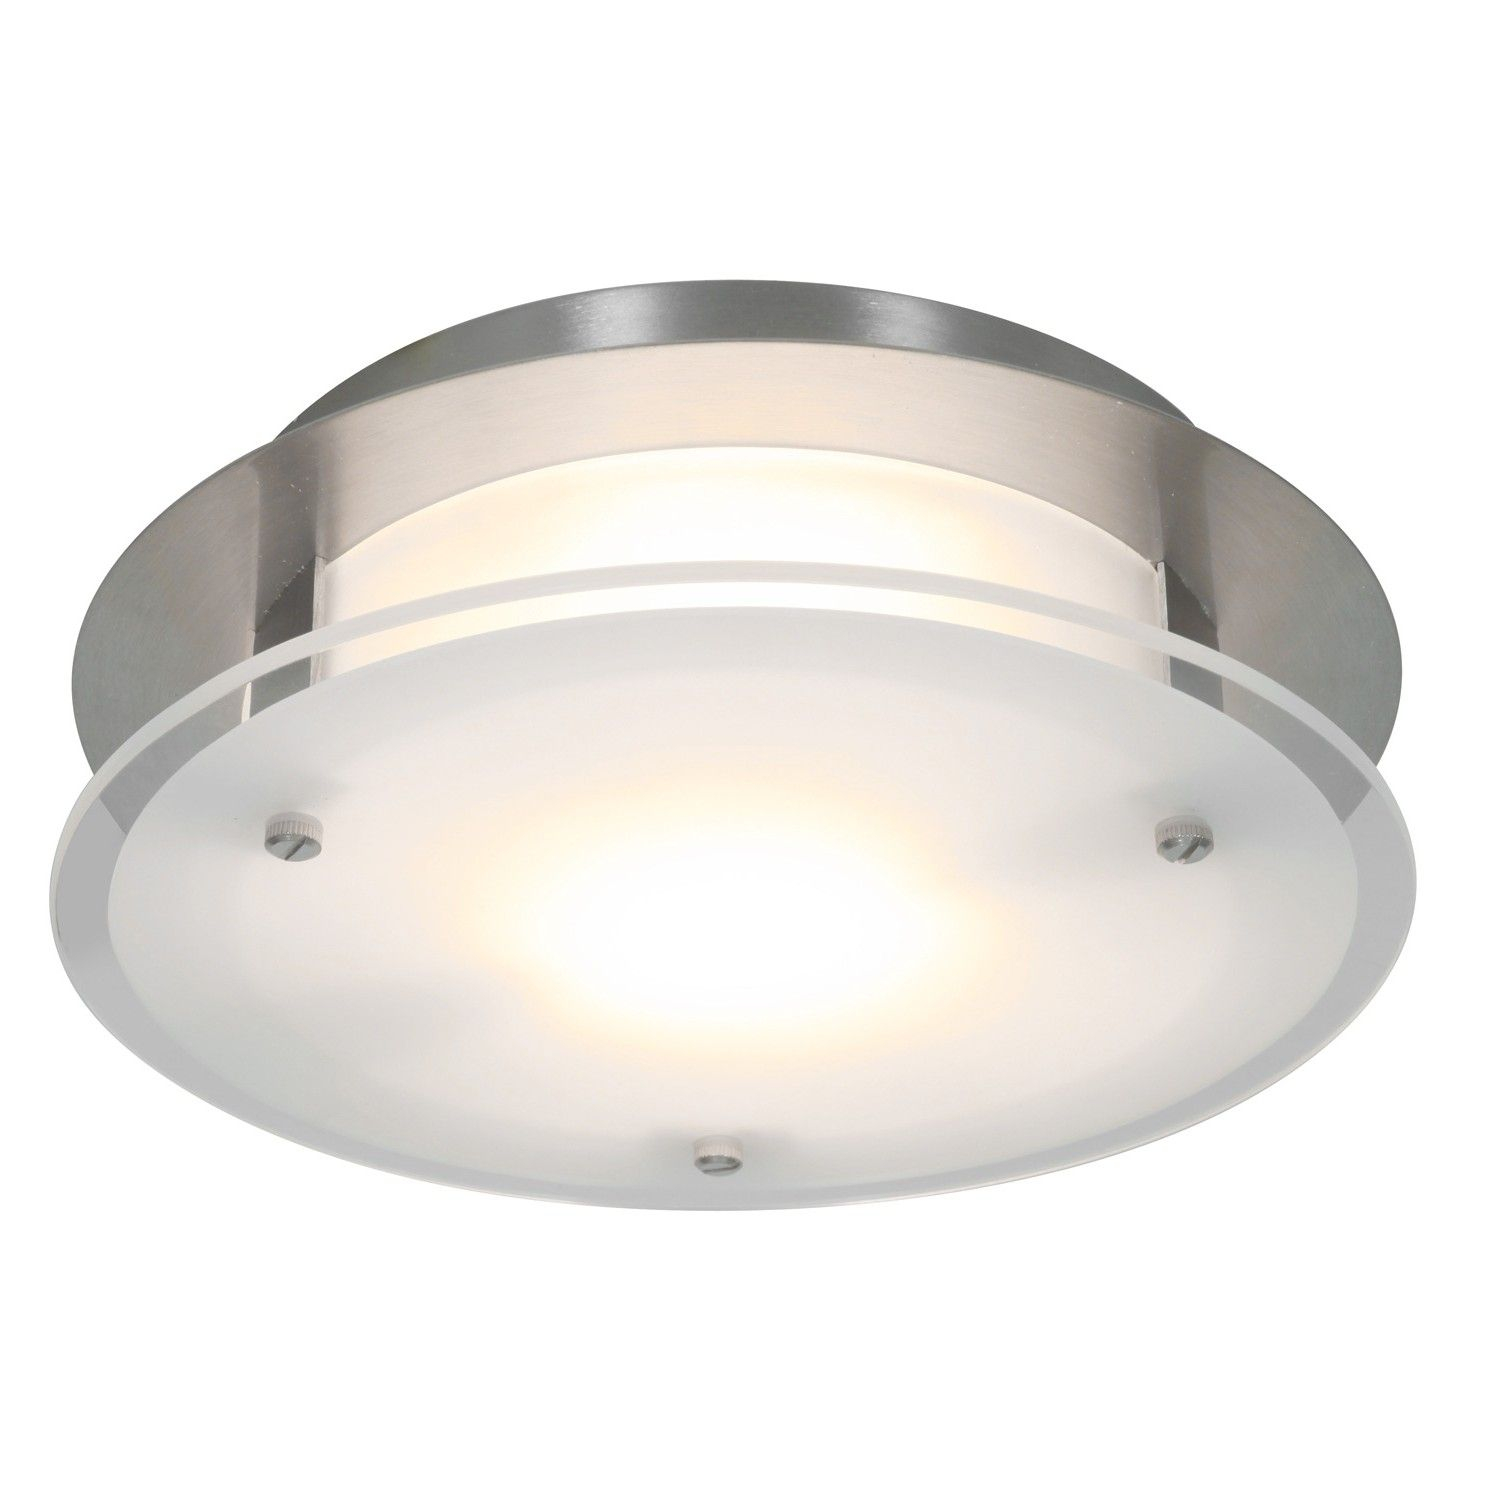 Luxury Ductless Bathroom Fan With Light Bathroom Fan Light within sizing 1500 X 1500